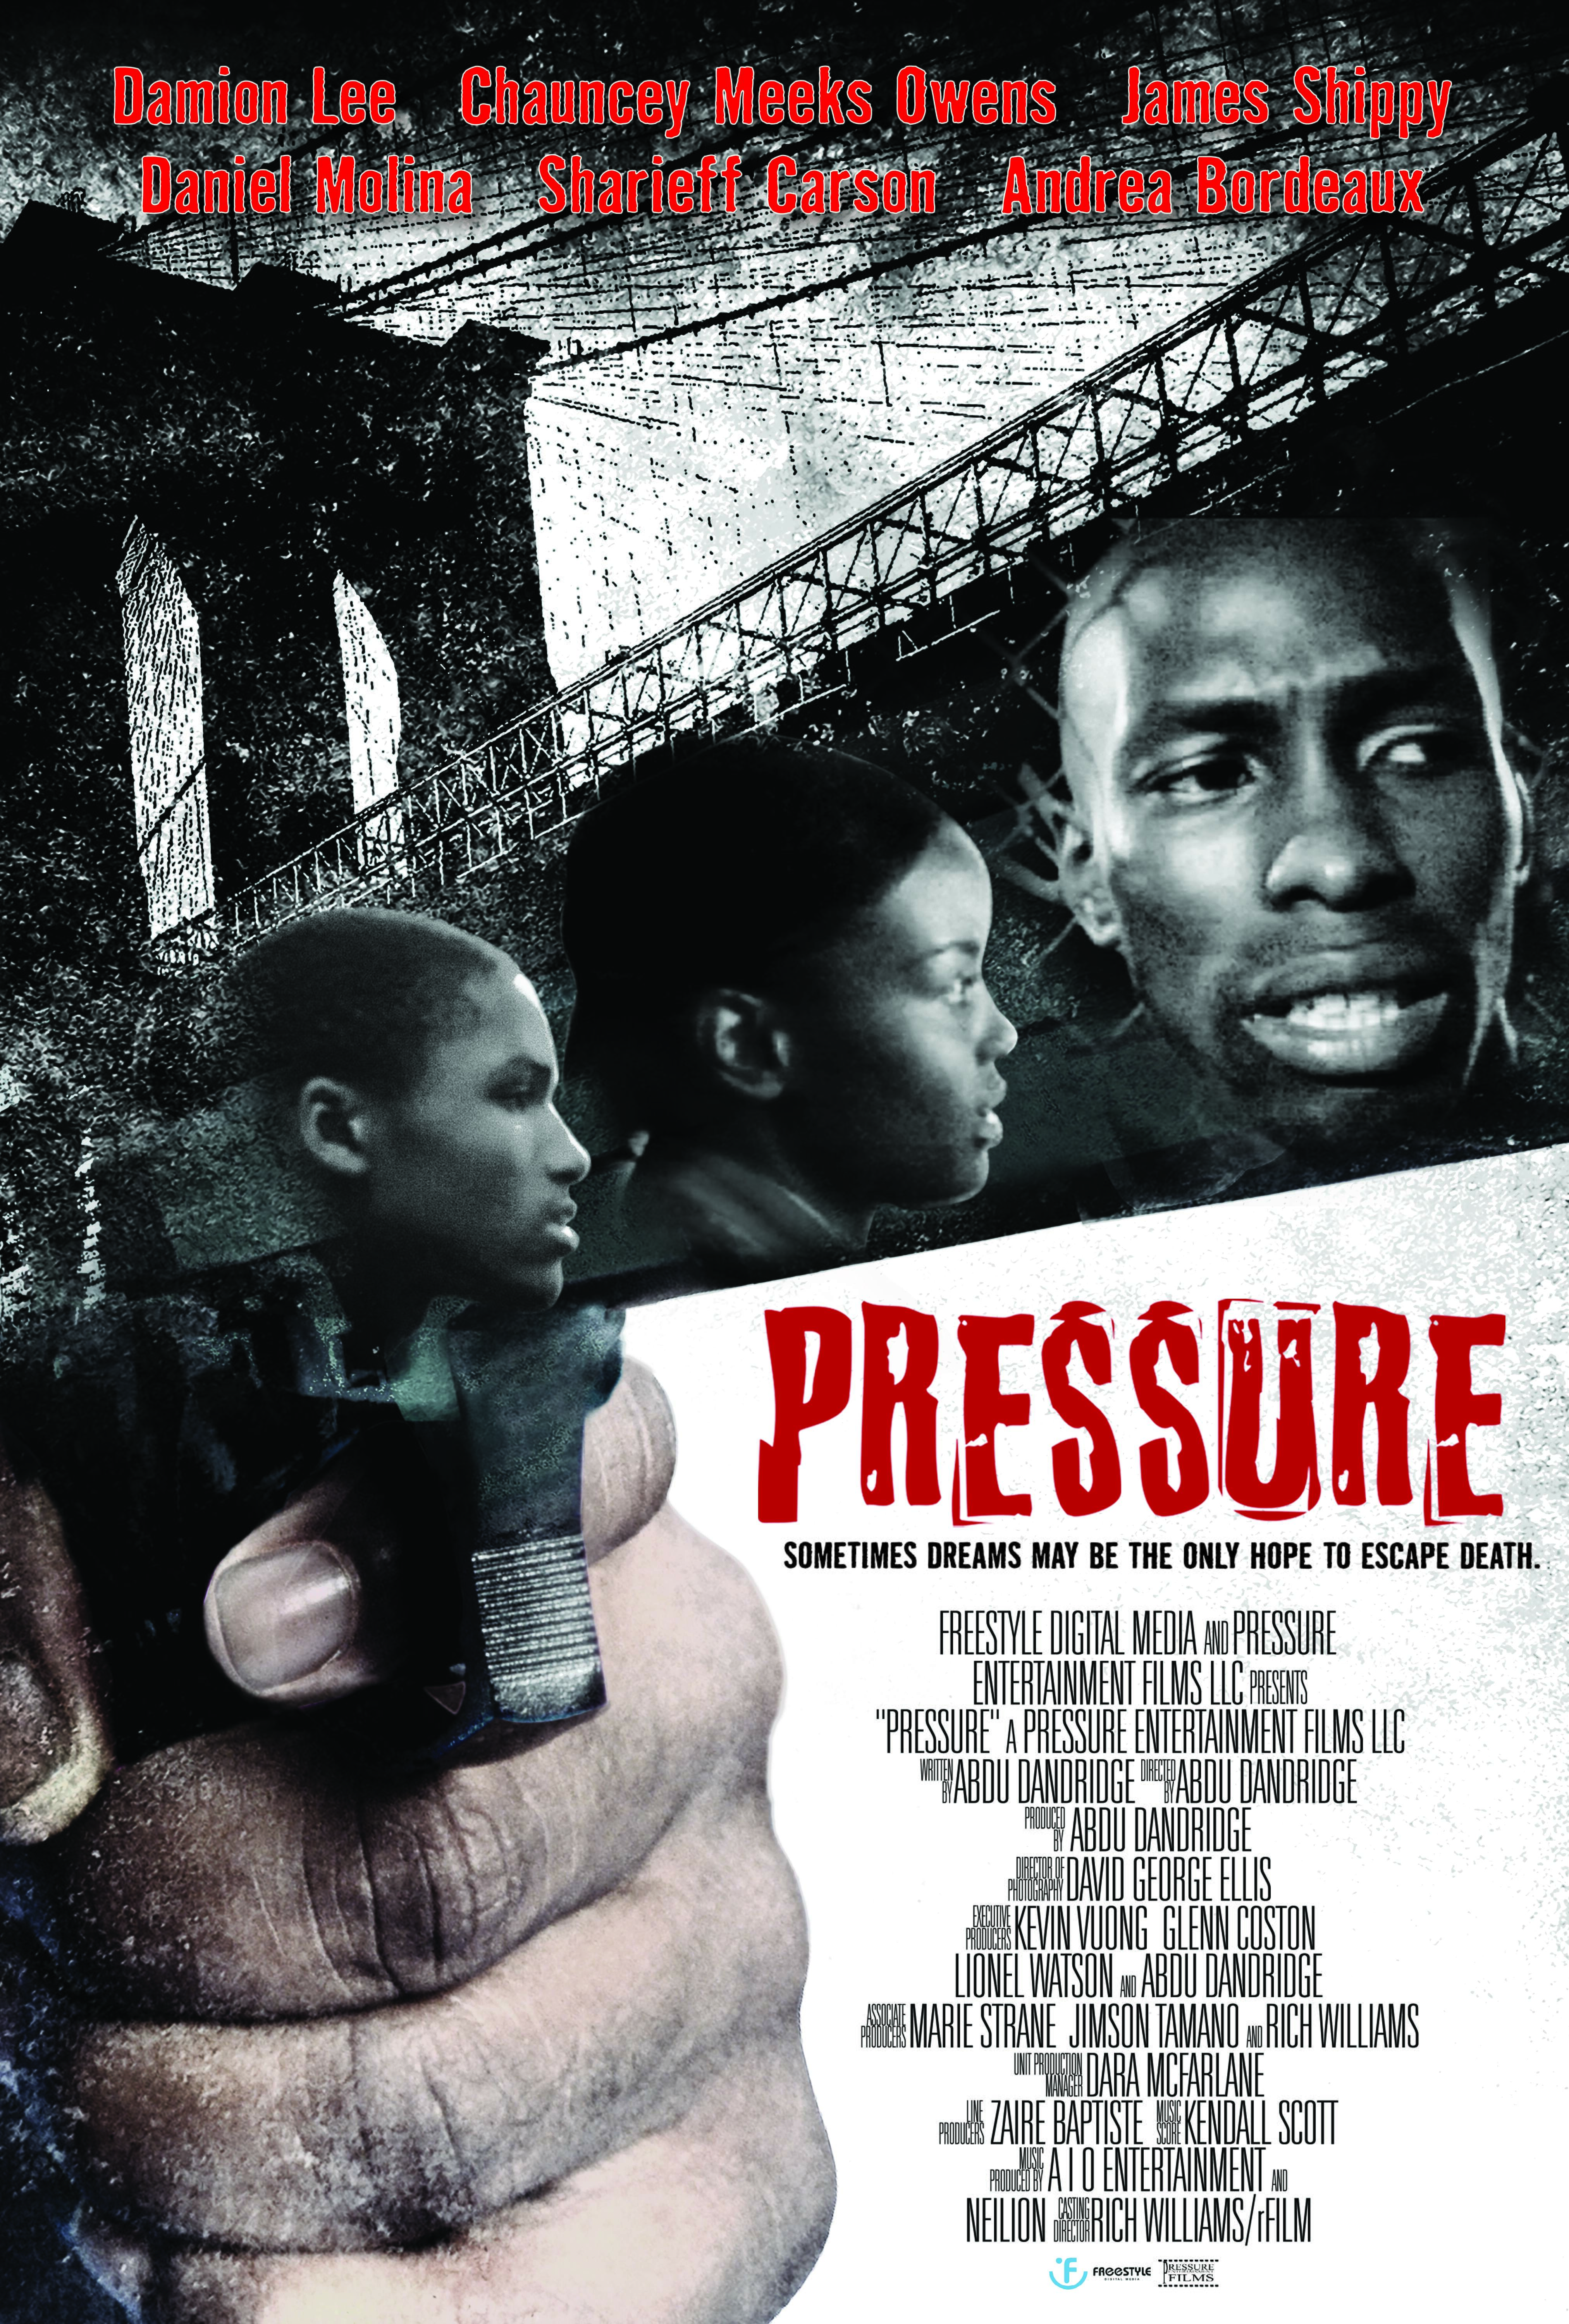 Nonton film Pressure layarkaca21 indoxx1 ganool online streaming terbaru